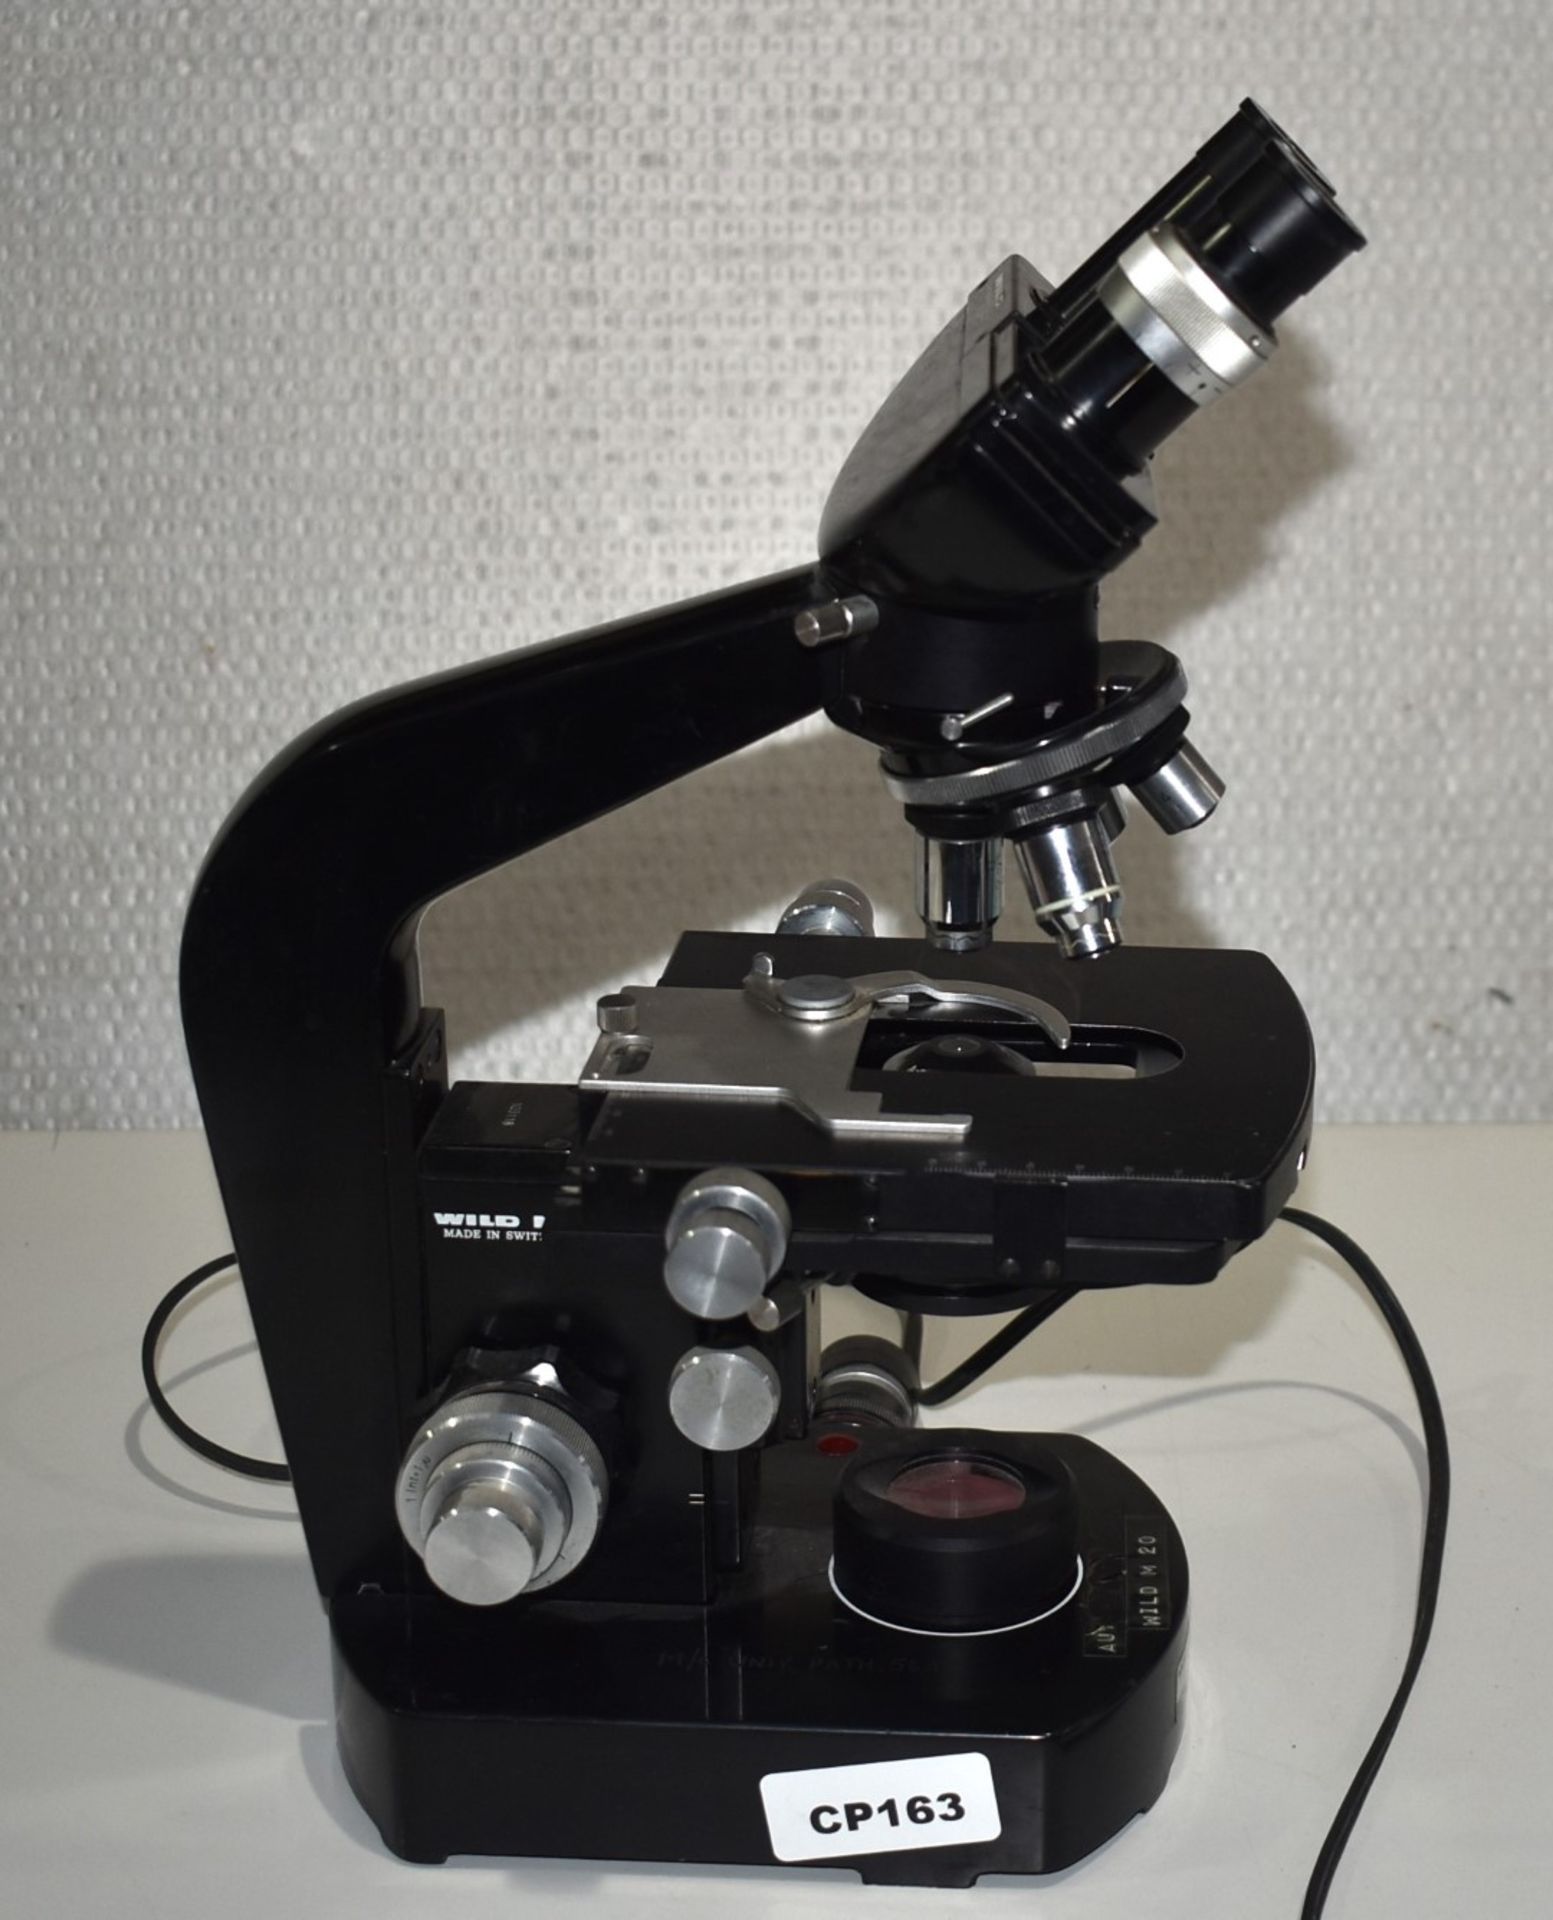 1 x Wild M20 Microscope CP163 - Image 3 of 22